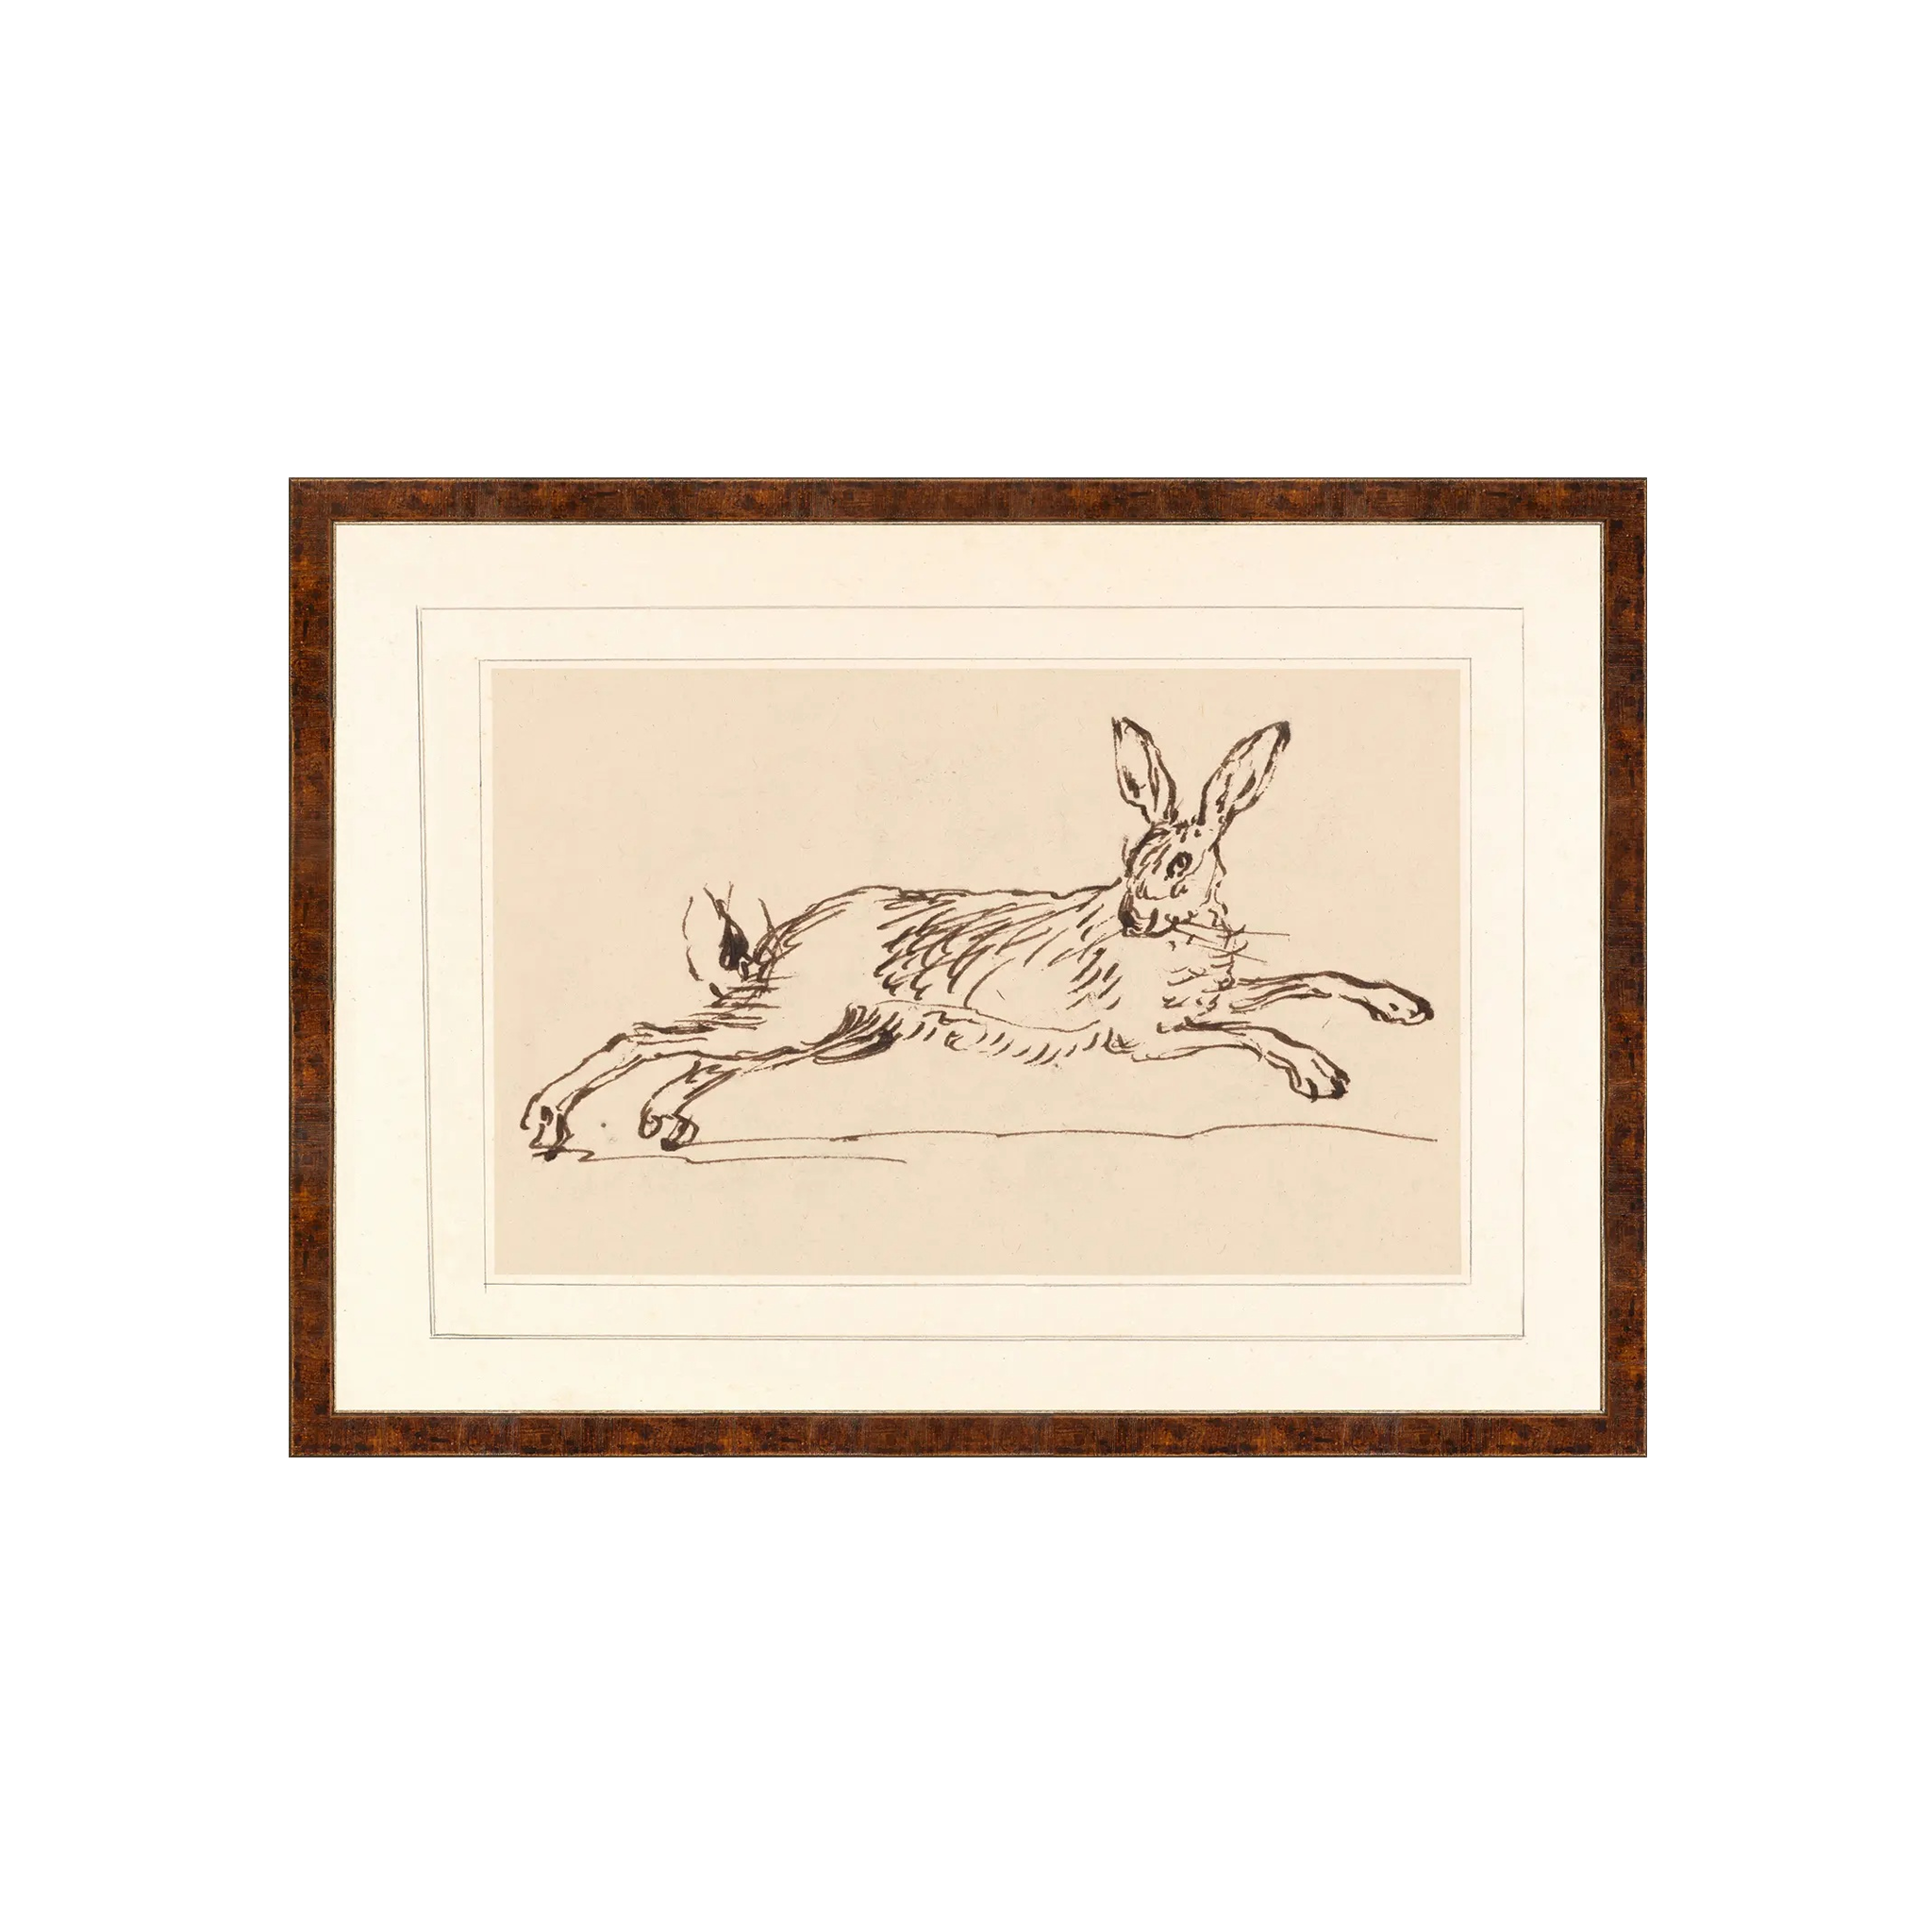 jumping hare drawing